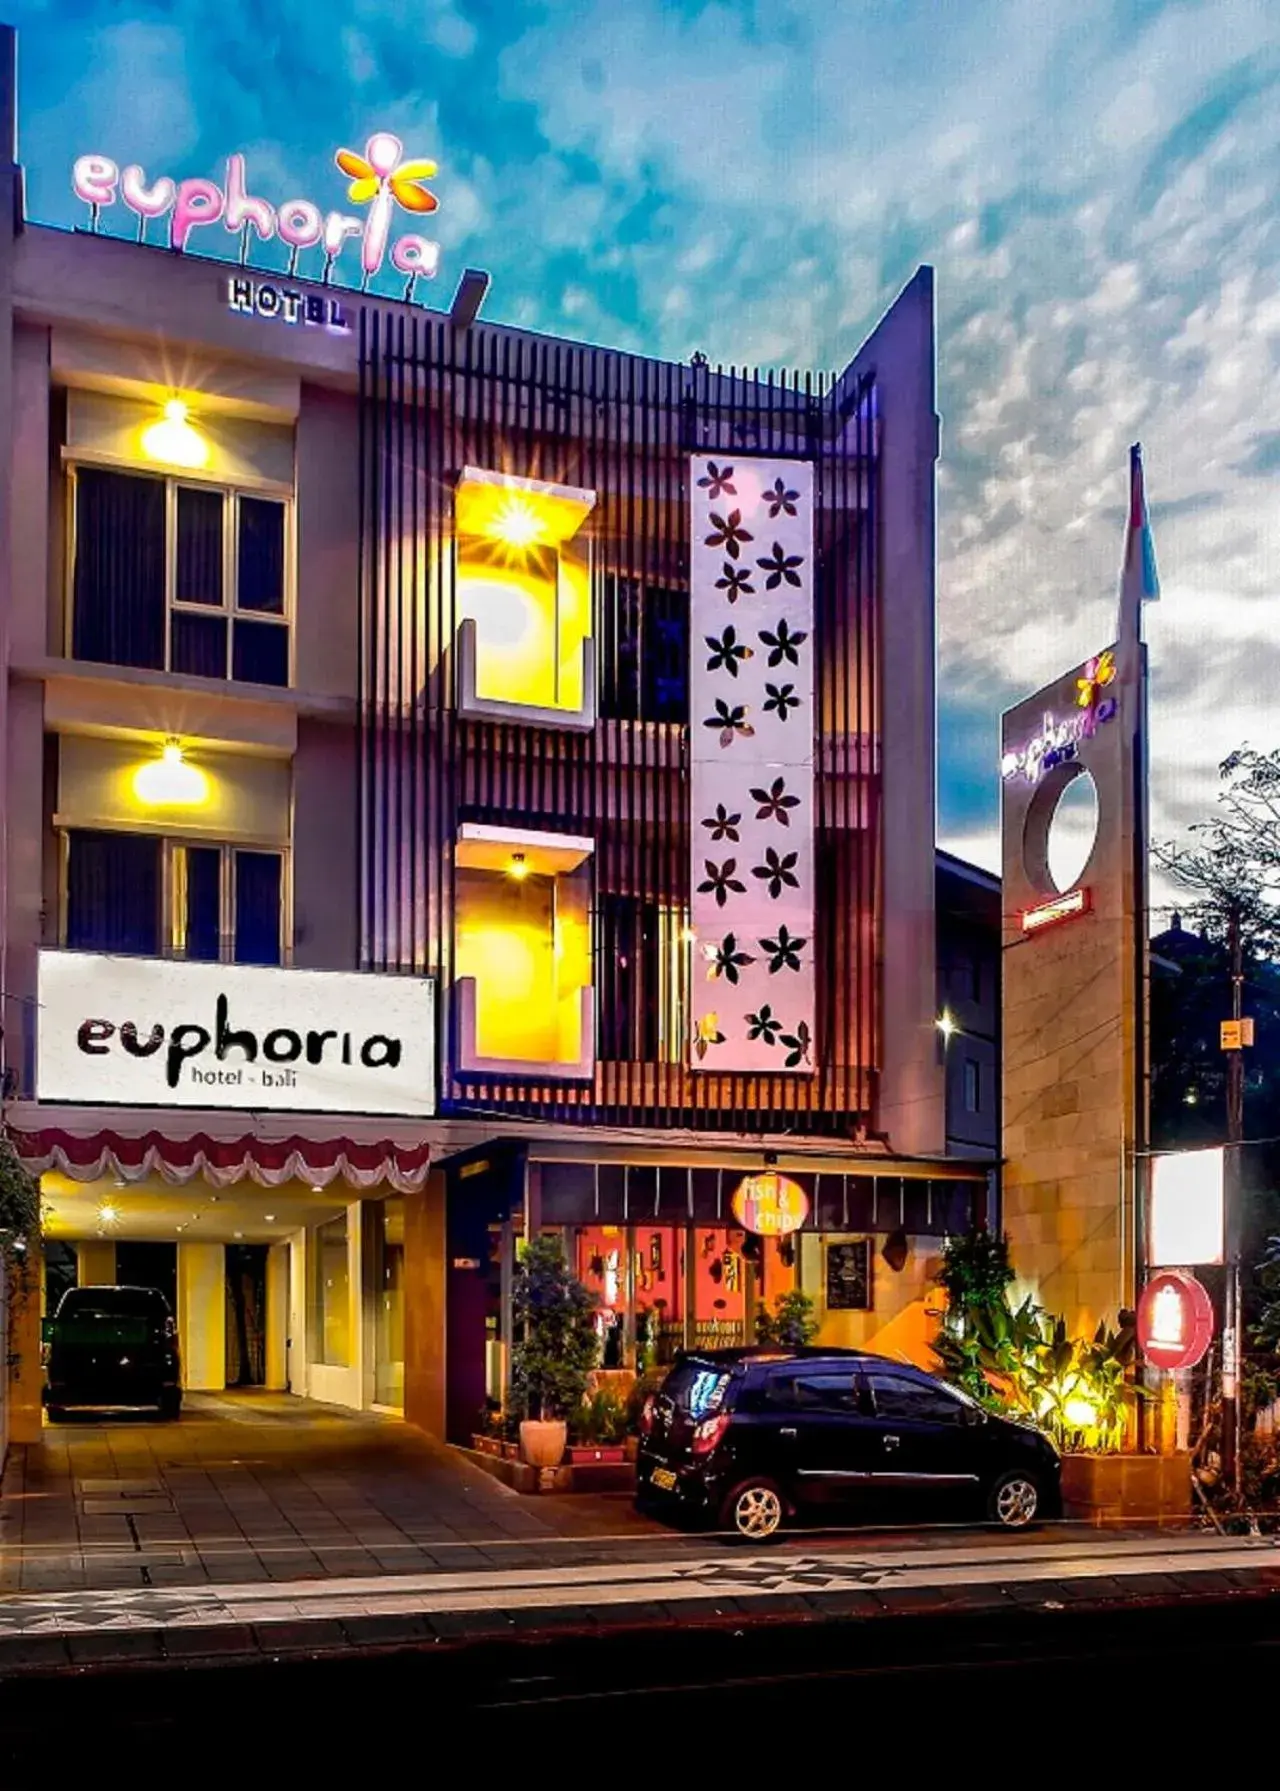 Area and facilities in Euphoria Hotel